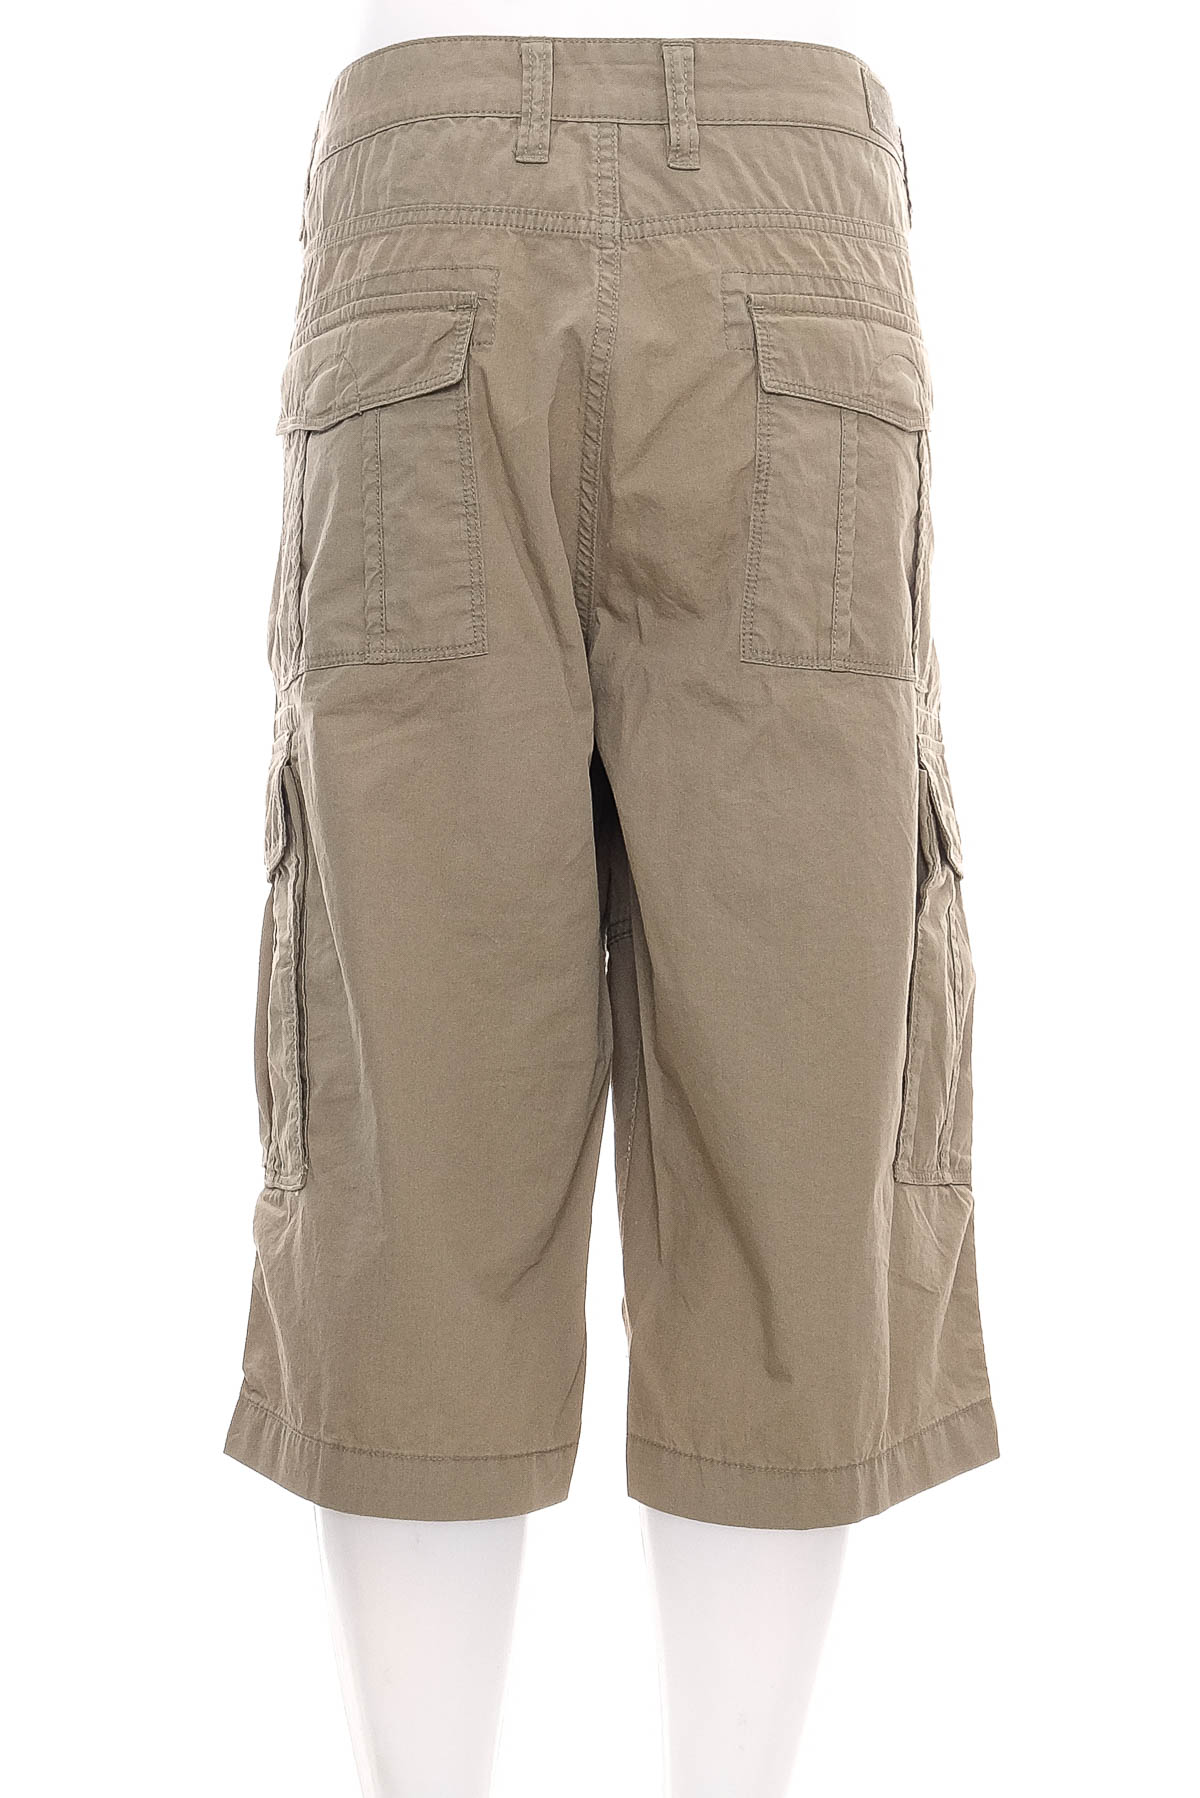 Men's shorts - CANDA - 1